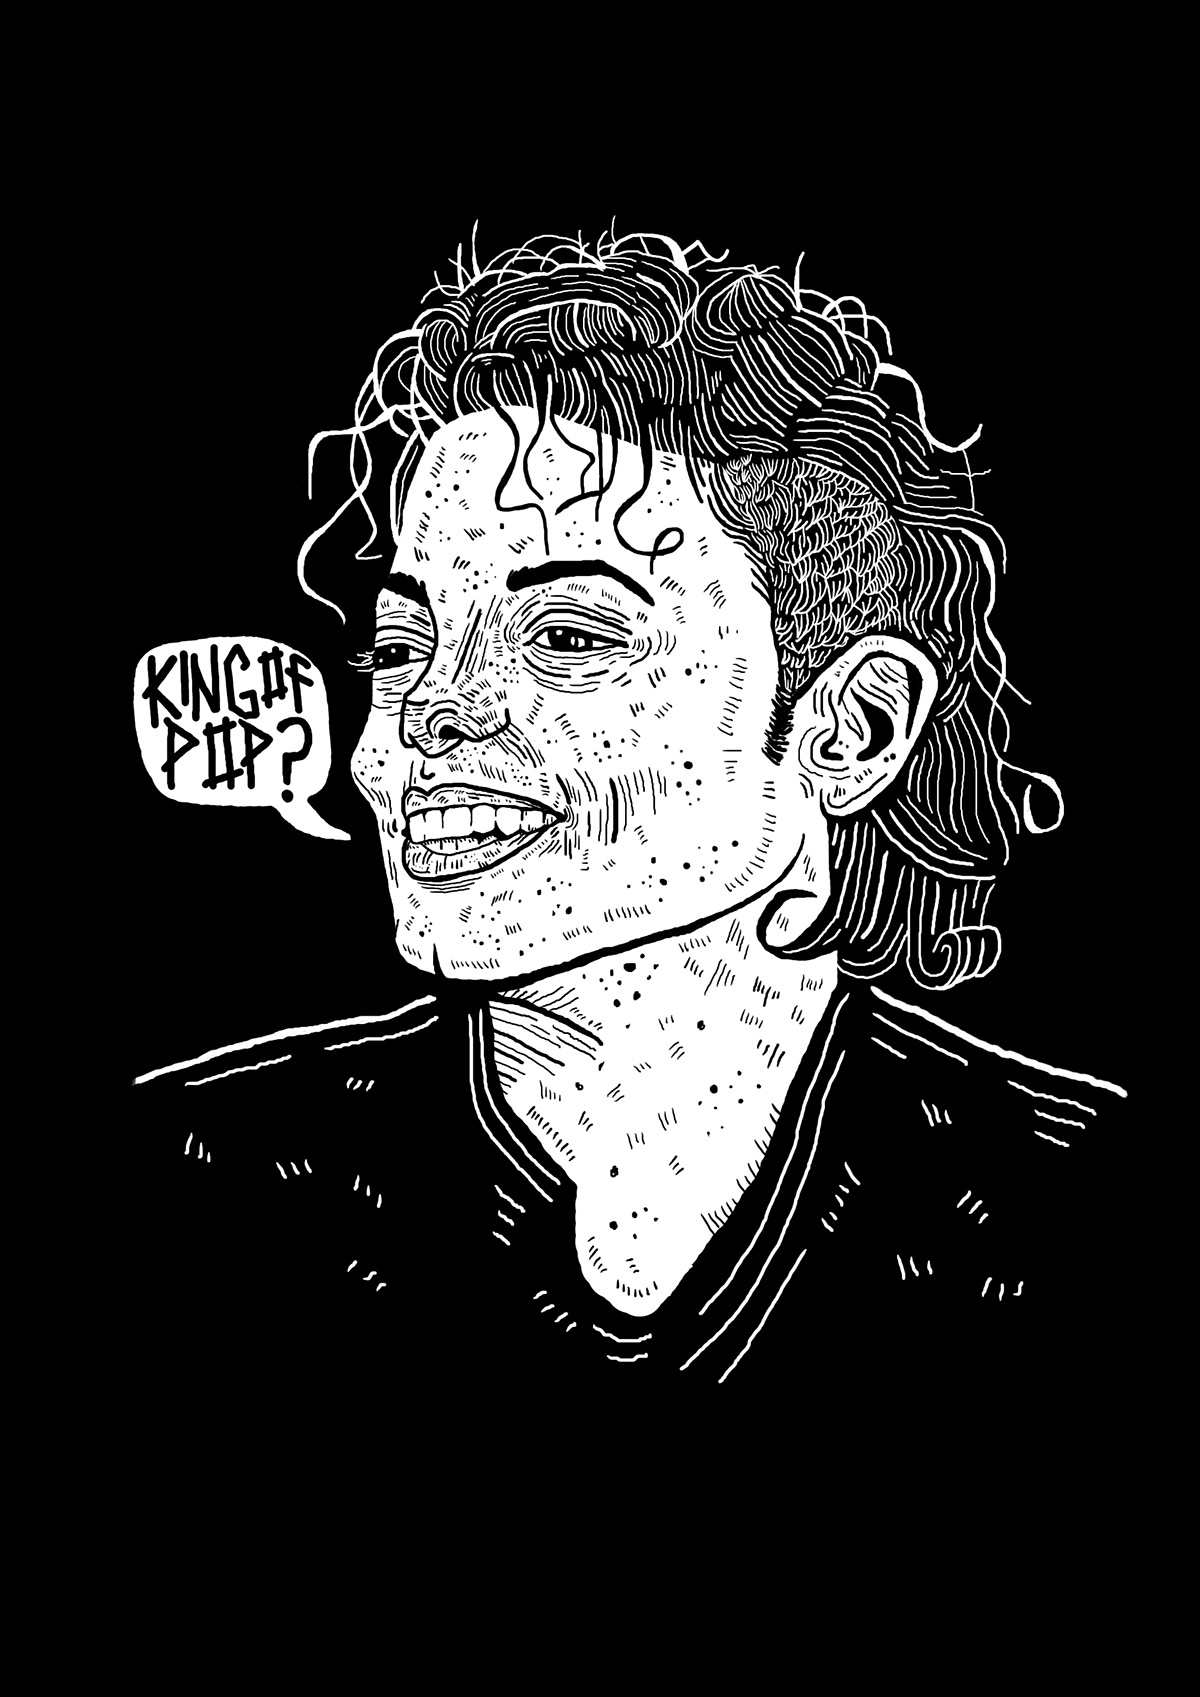 portrait art zombie Celebrity justin bieber travis barker Blink 182 tattoo Michael Jackson King of pop u2 bono the beatles John Lennon